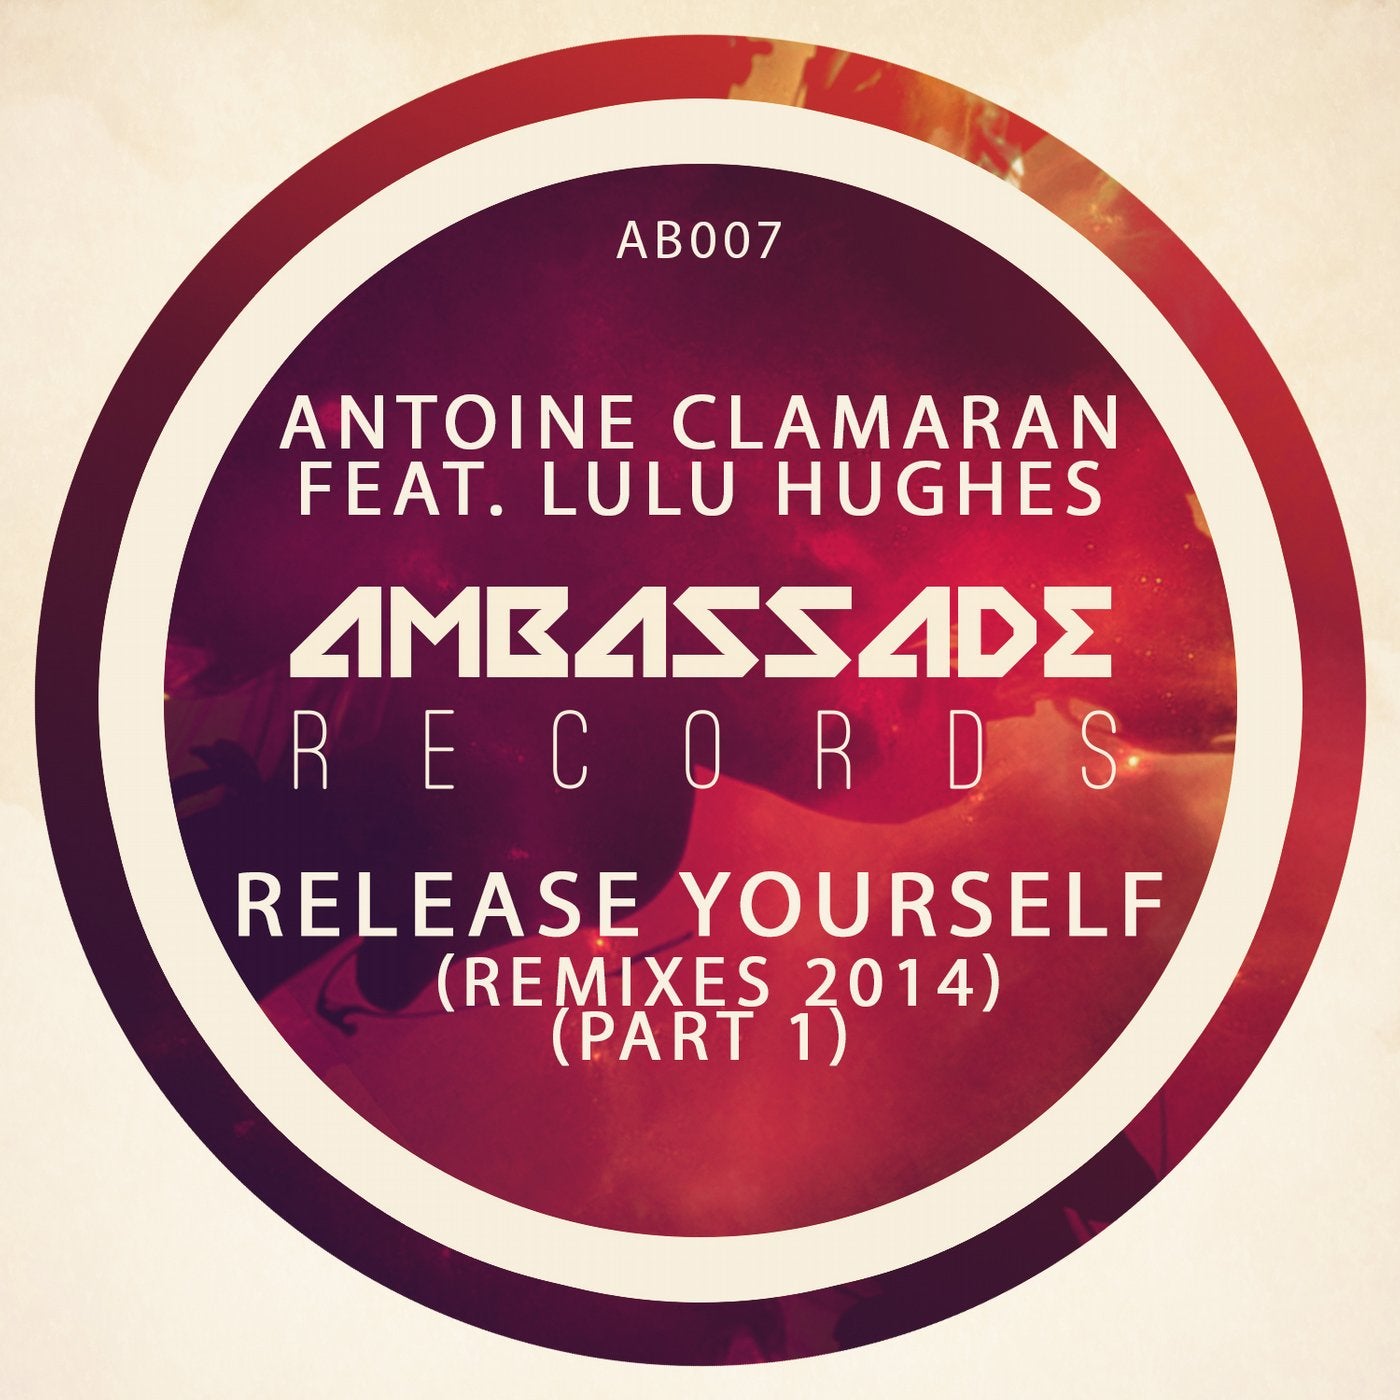 Release Yourself (Remixes 2014 Part 1)